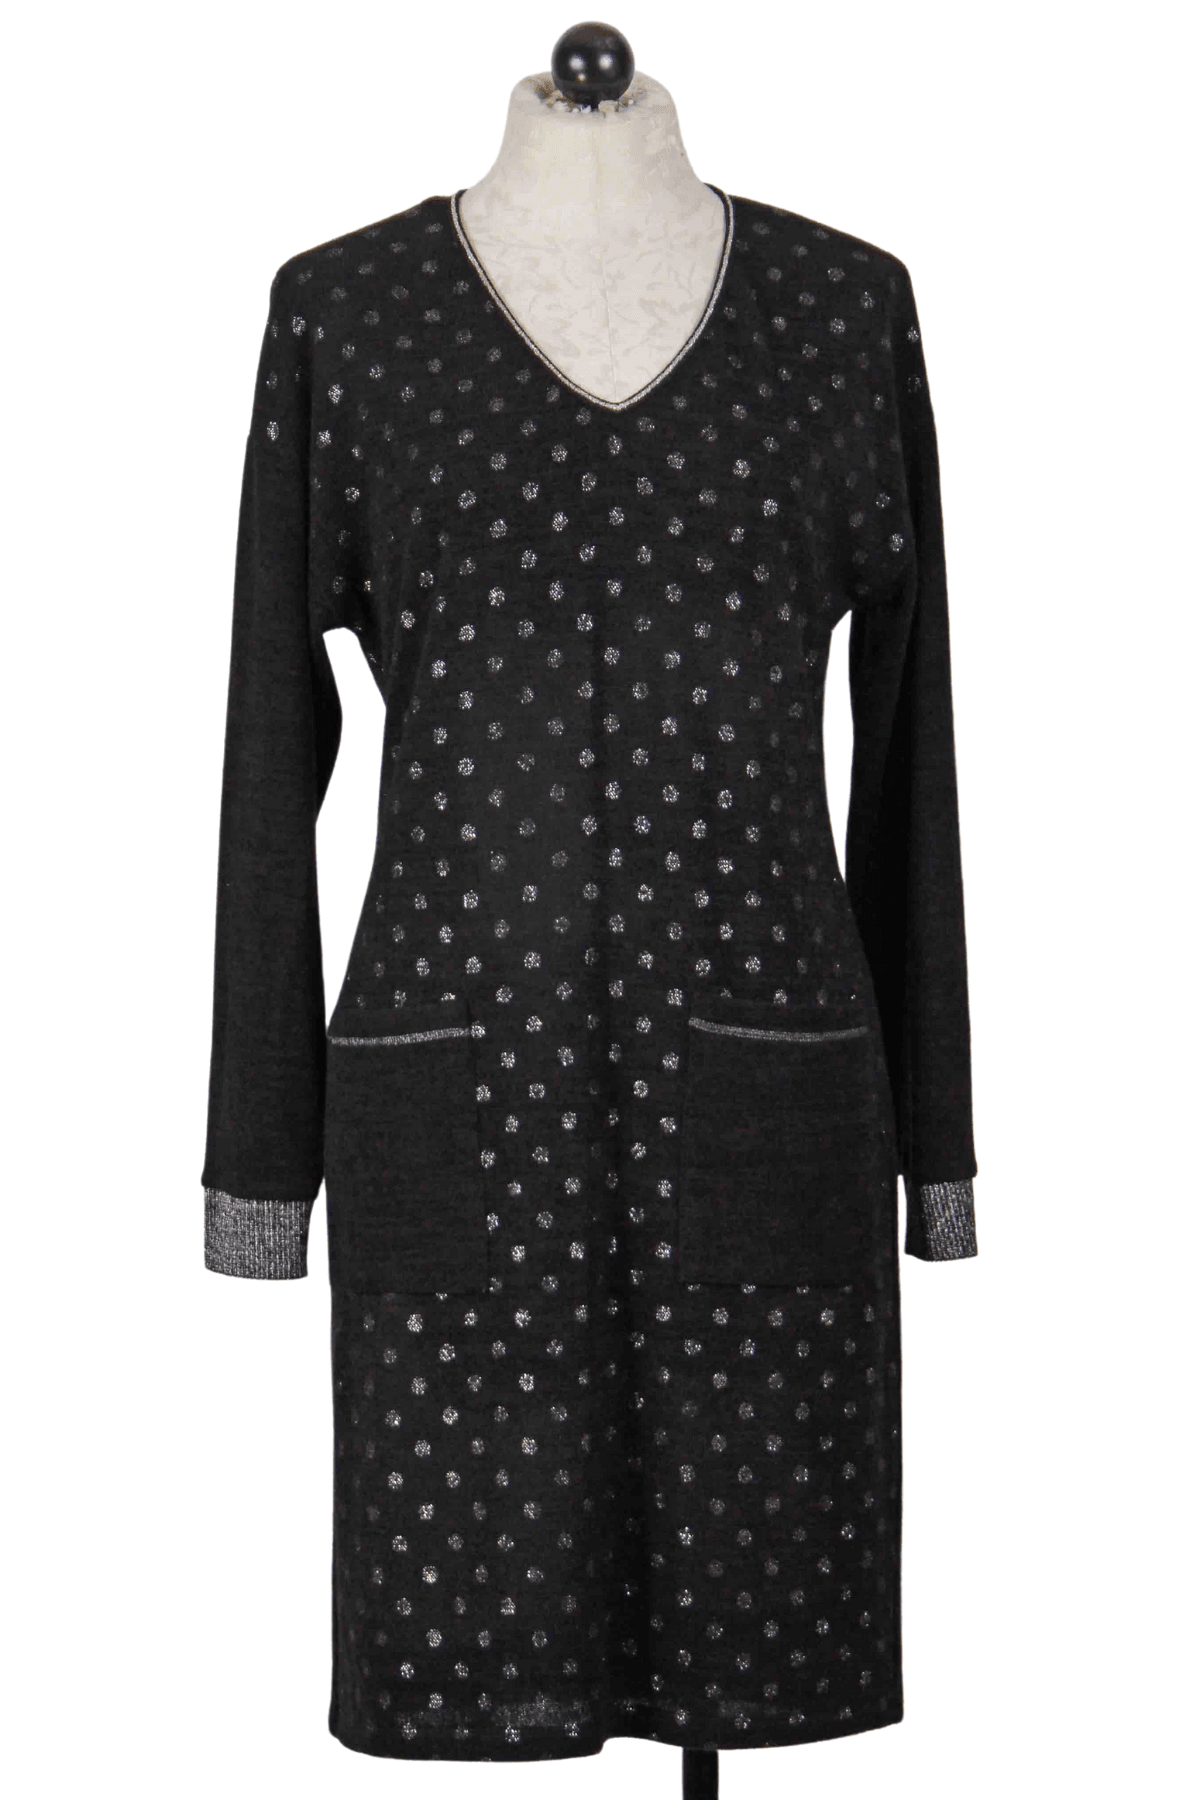 Black Polka Dot Metallic Knit Dress By Frank Lyman